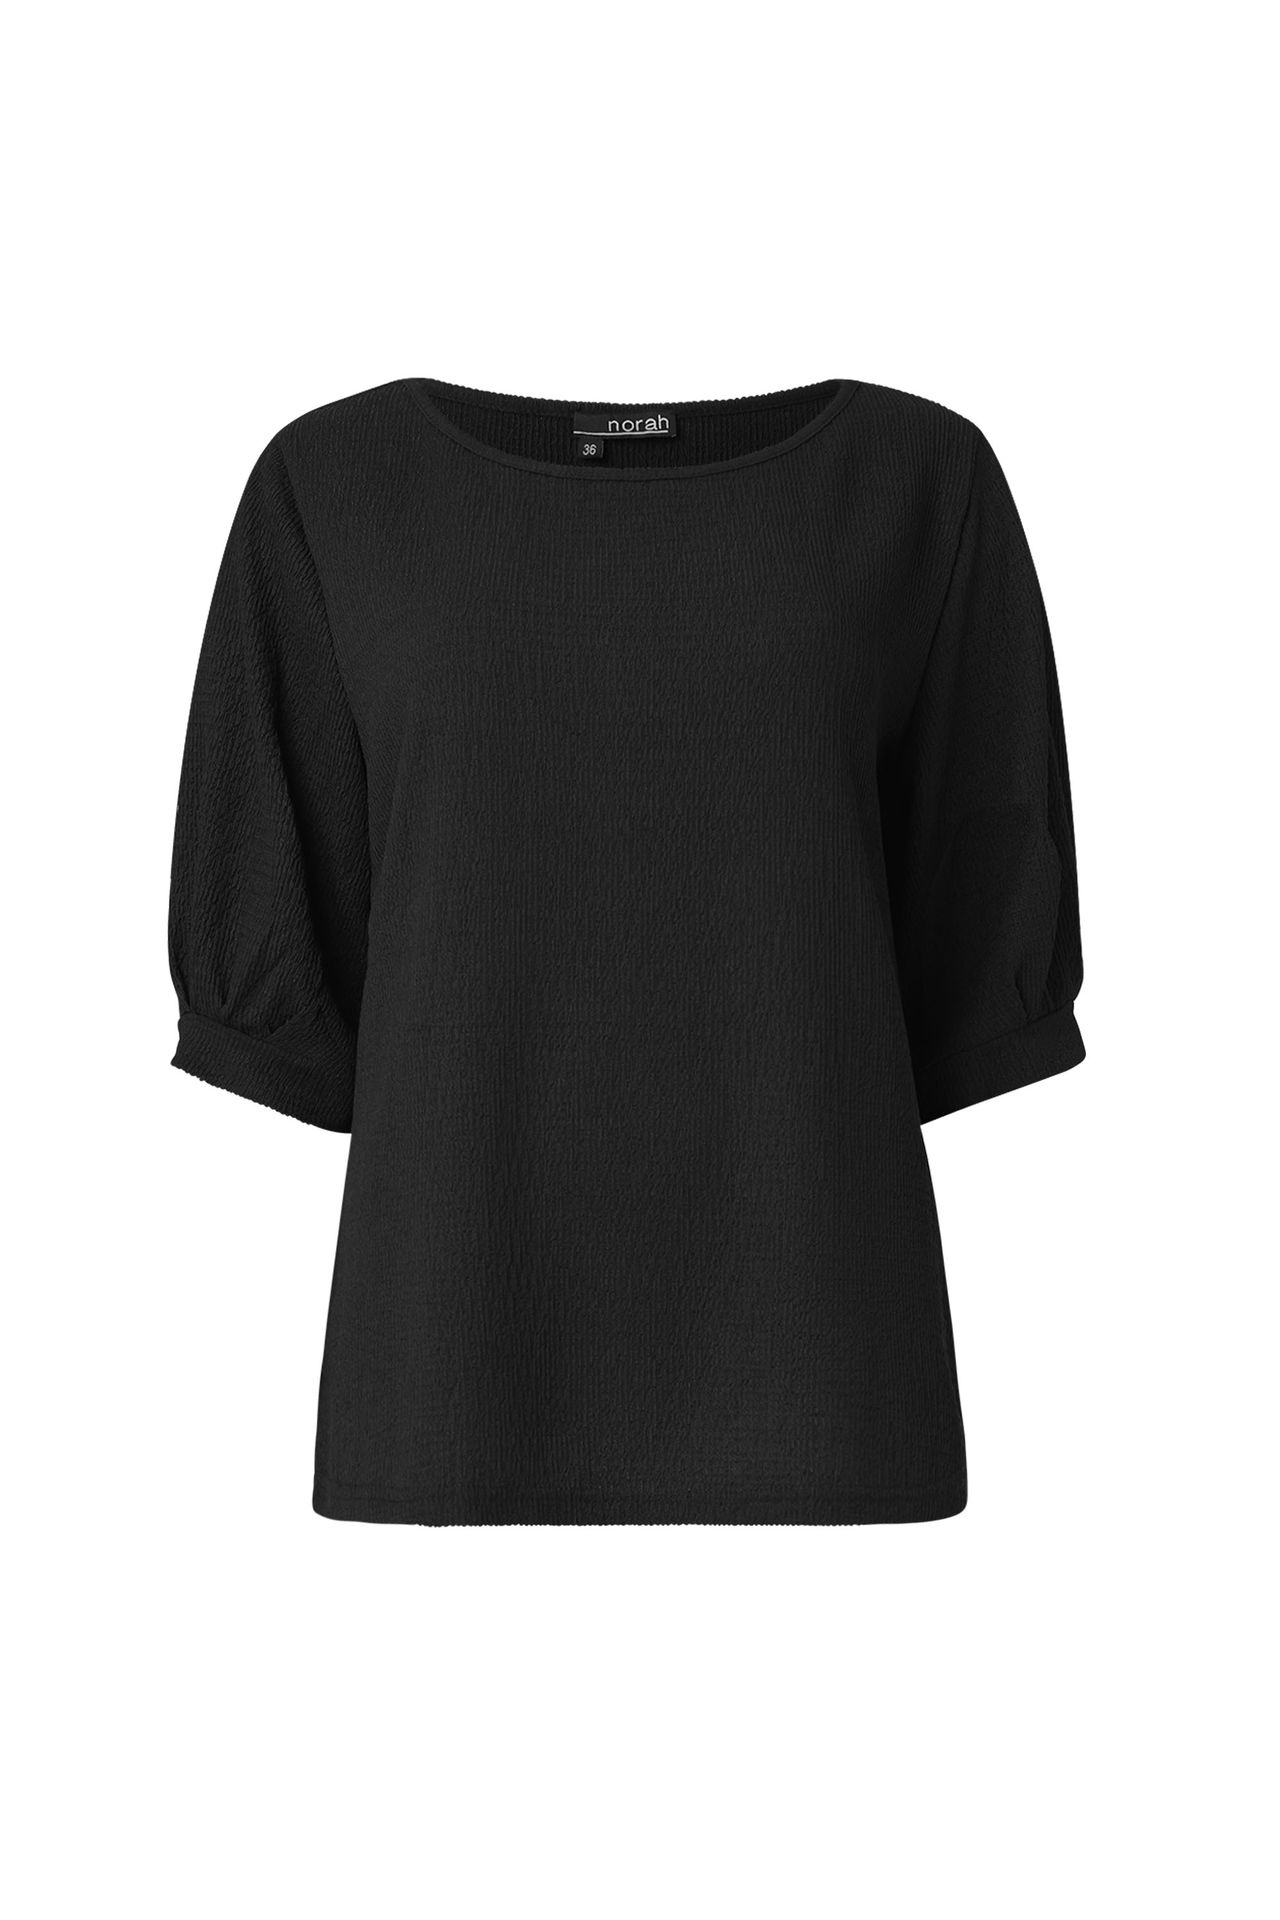 Norah Zwart shirt black 214326-001